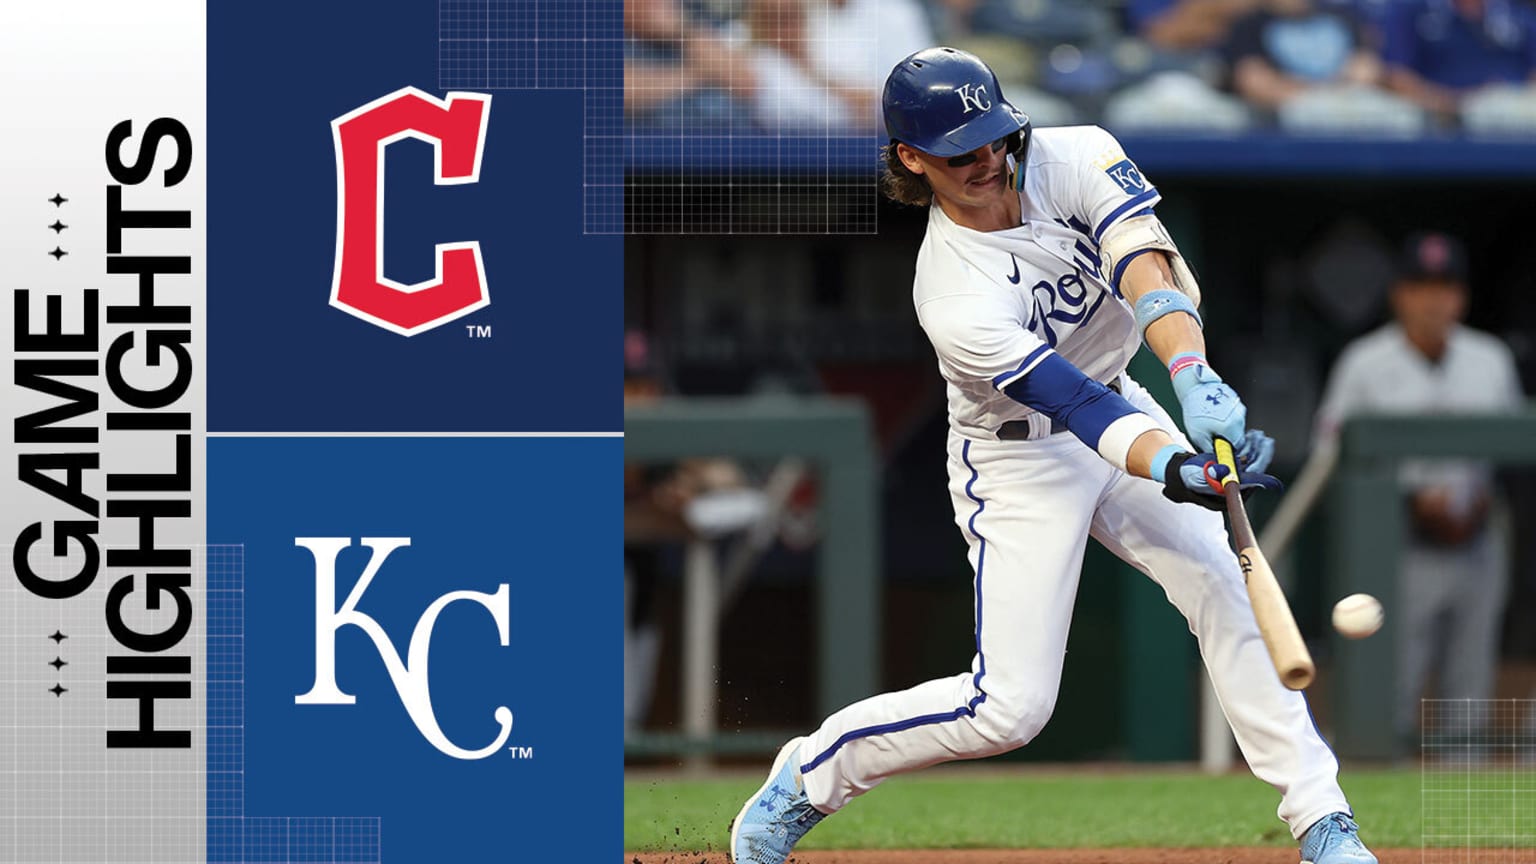 No. 7 overall MLB prospect - Kansas City Royals Highlights